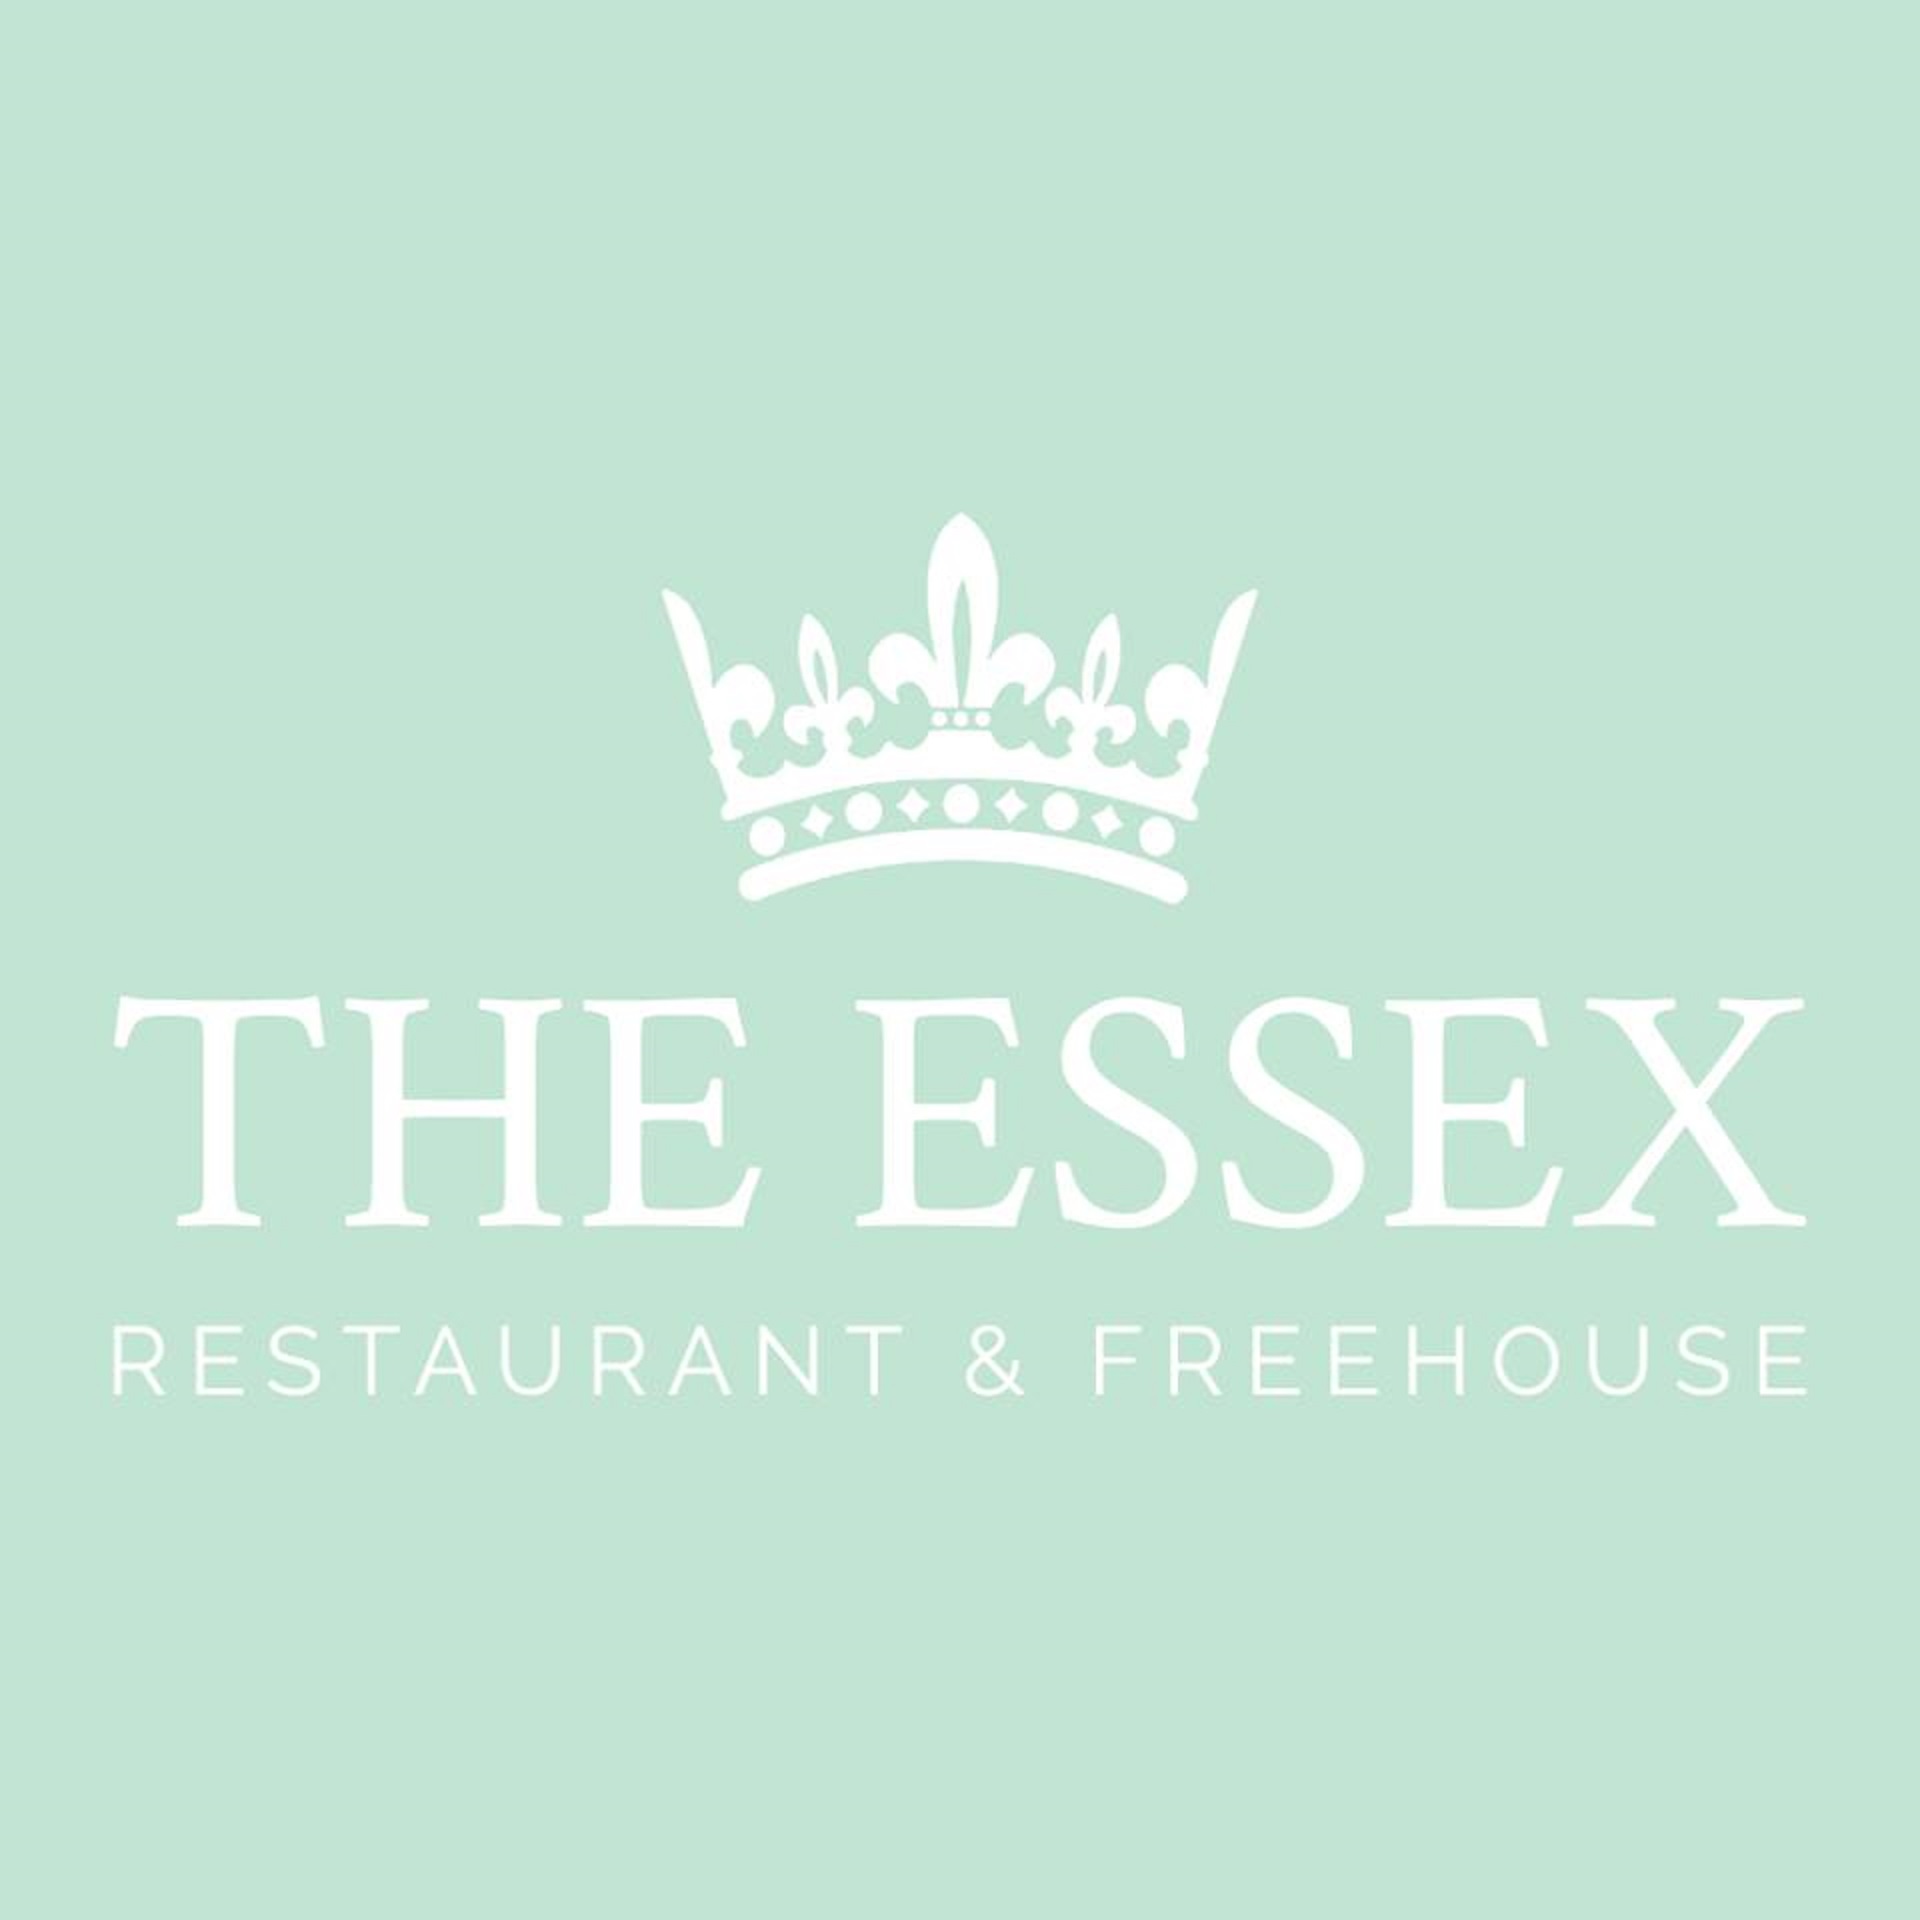 The Essex